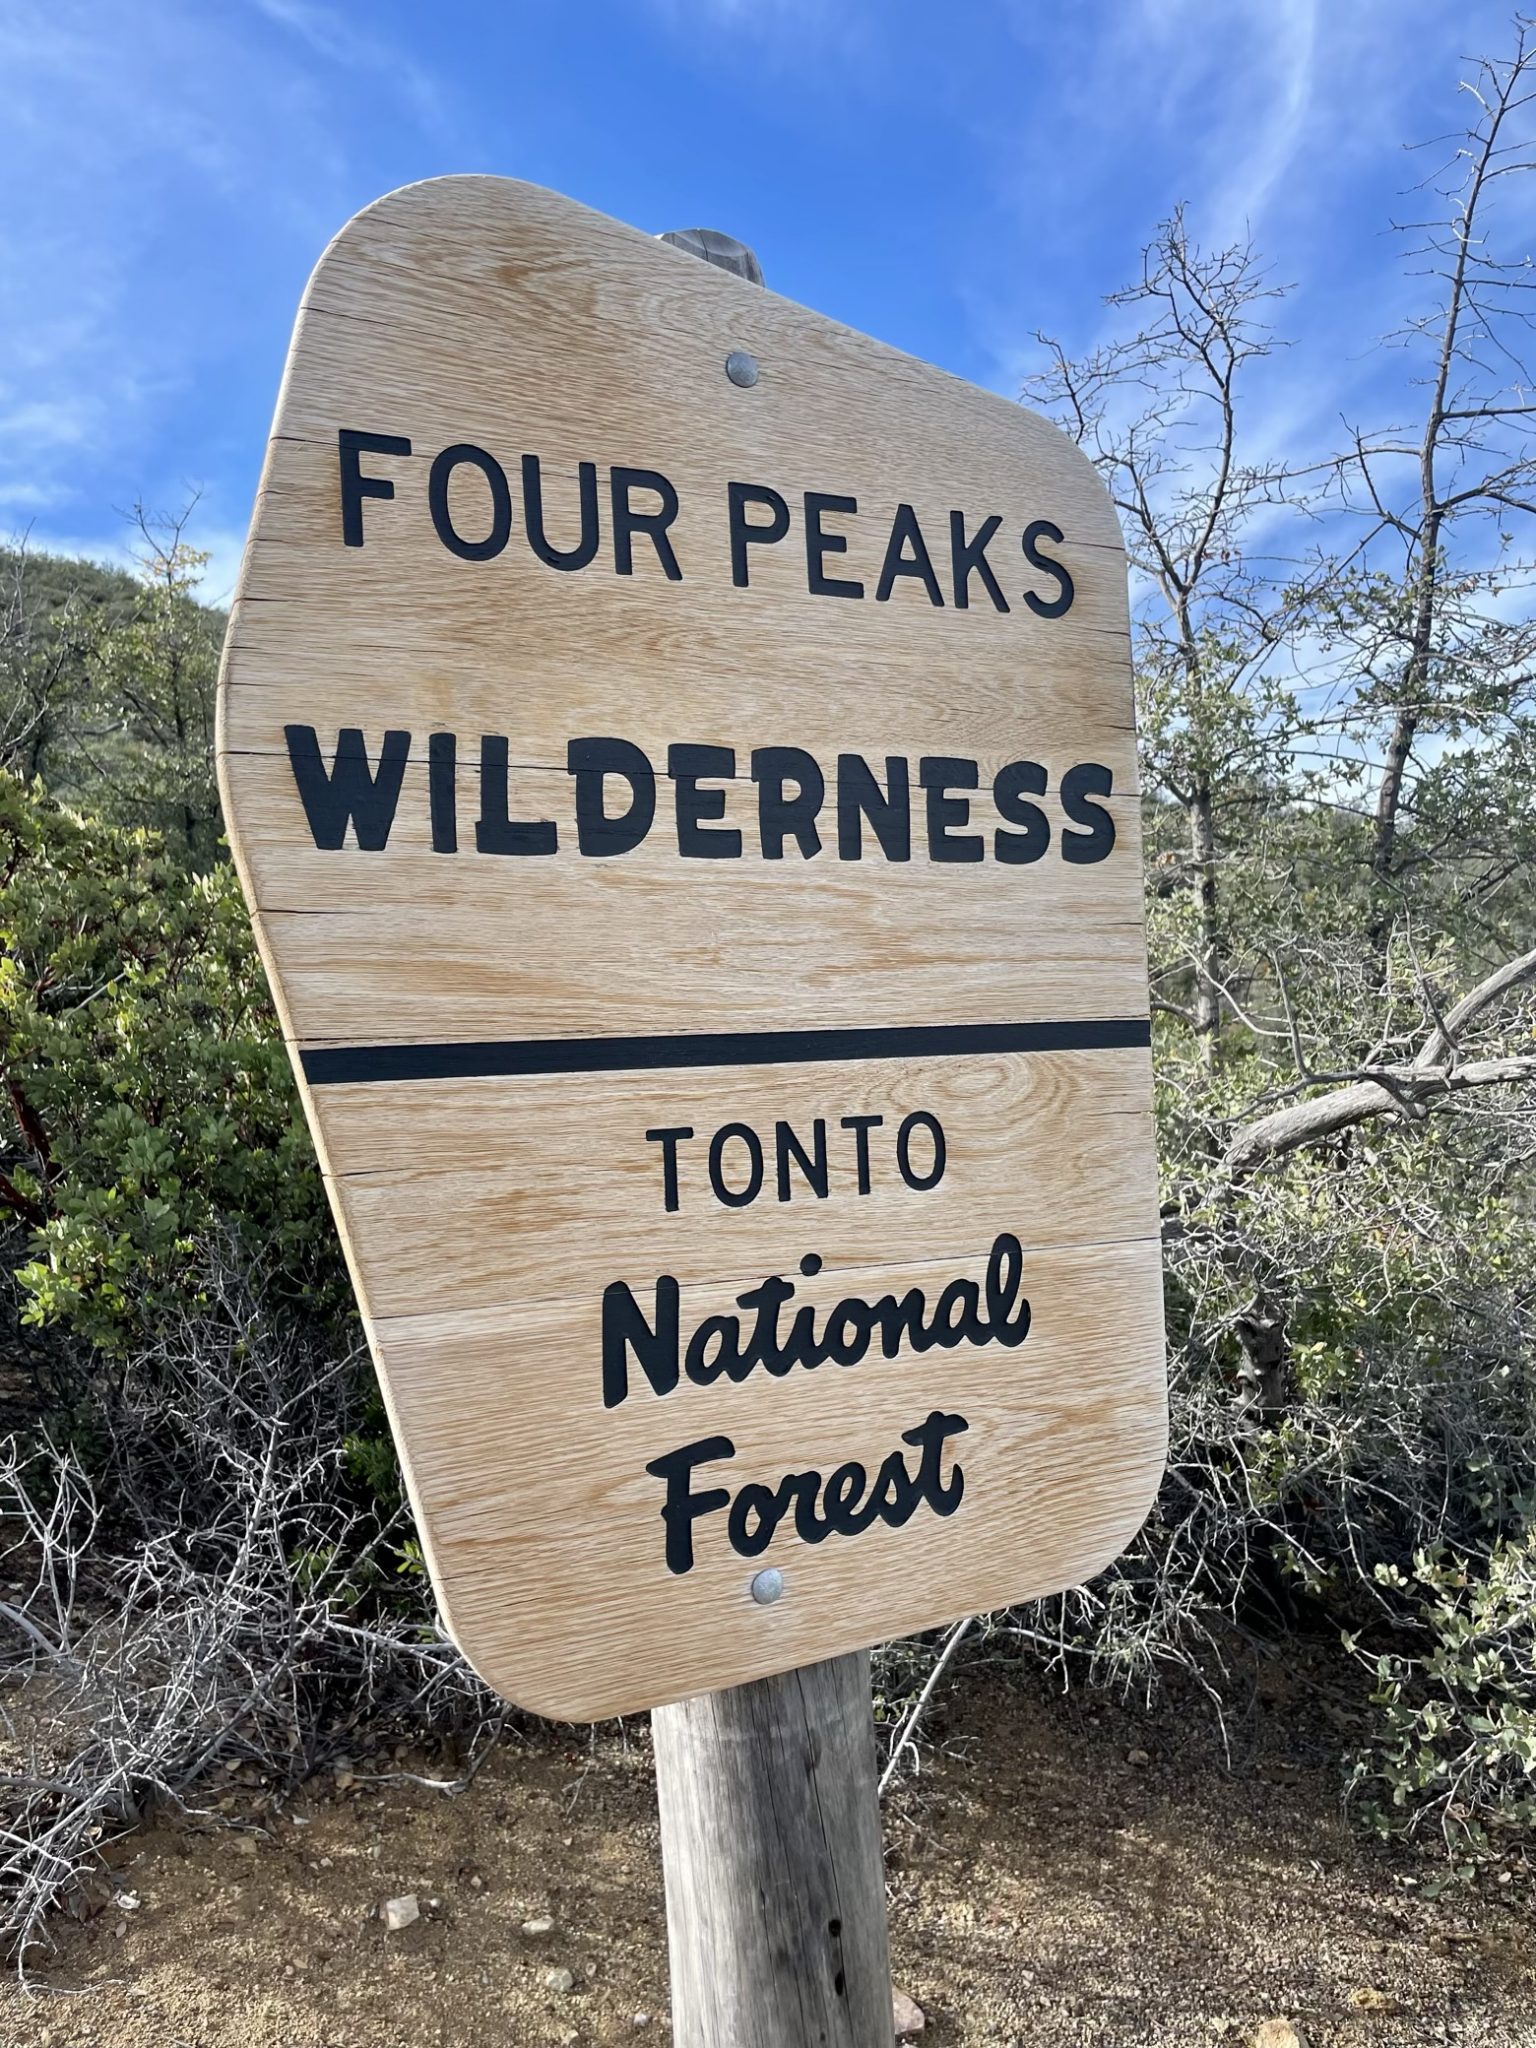 Adios, Four Peaks Wilderness